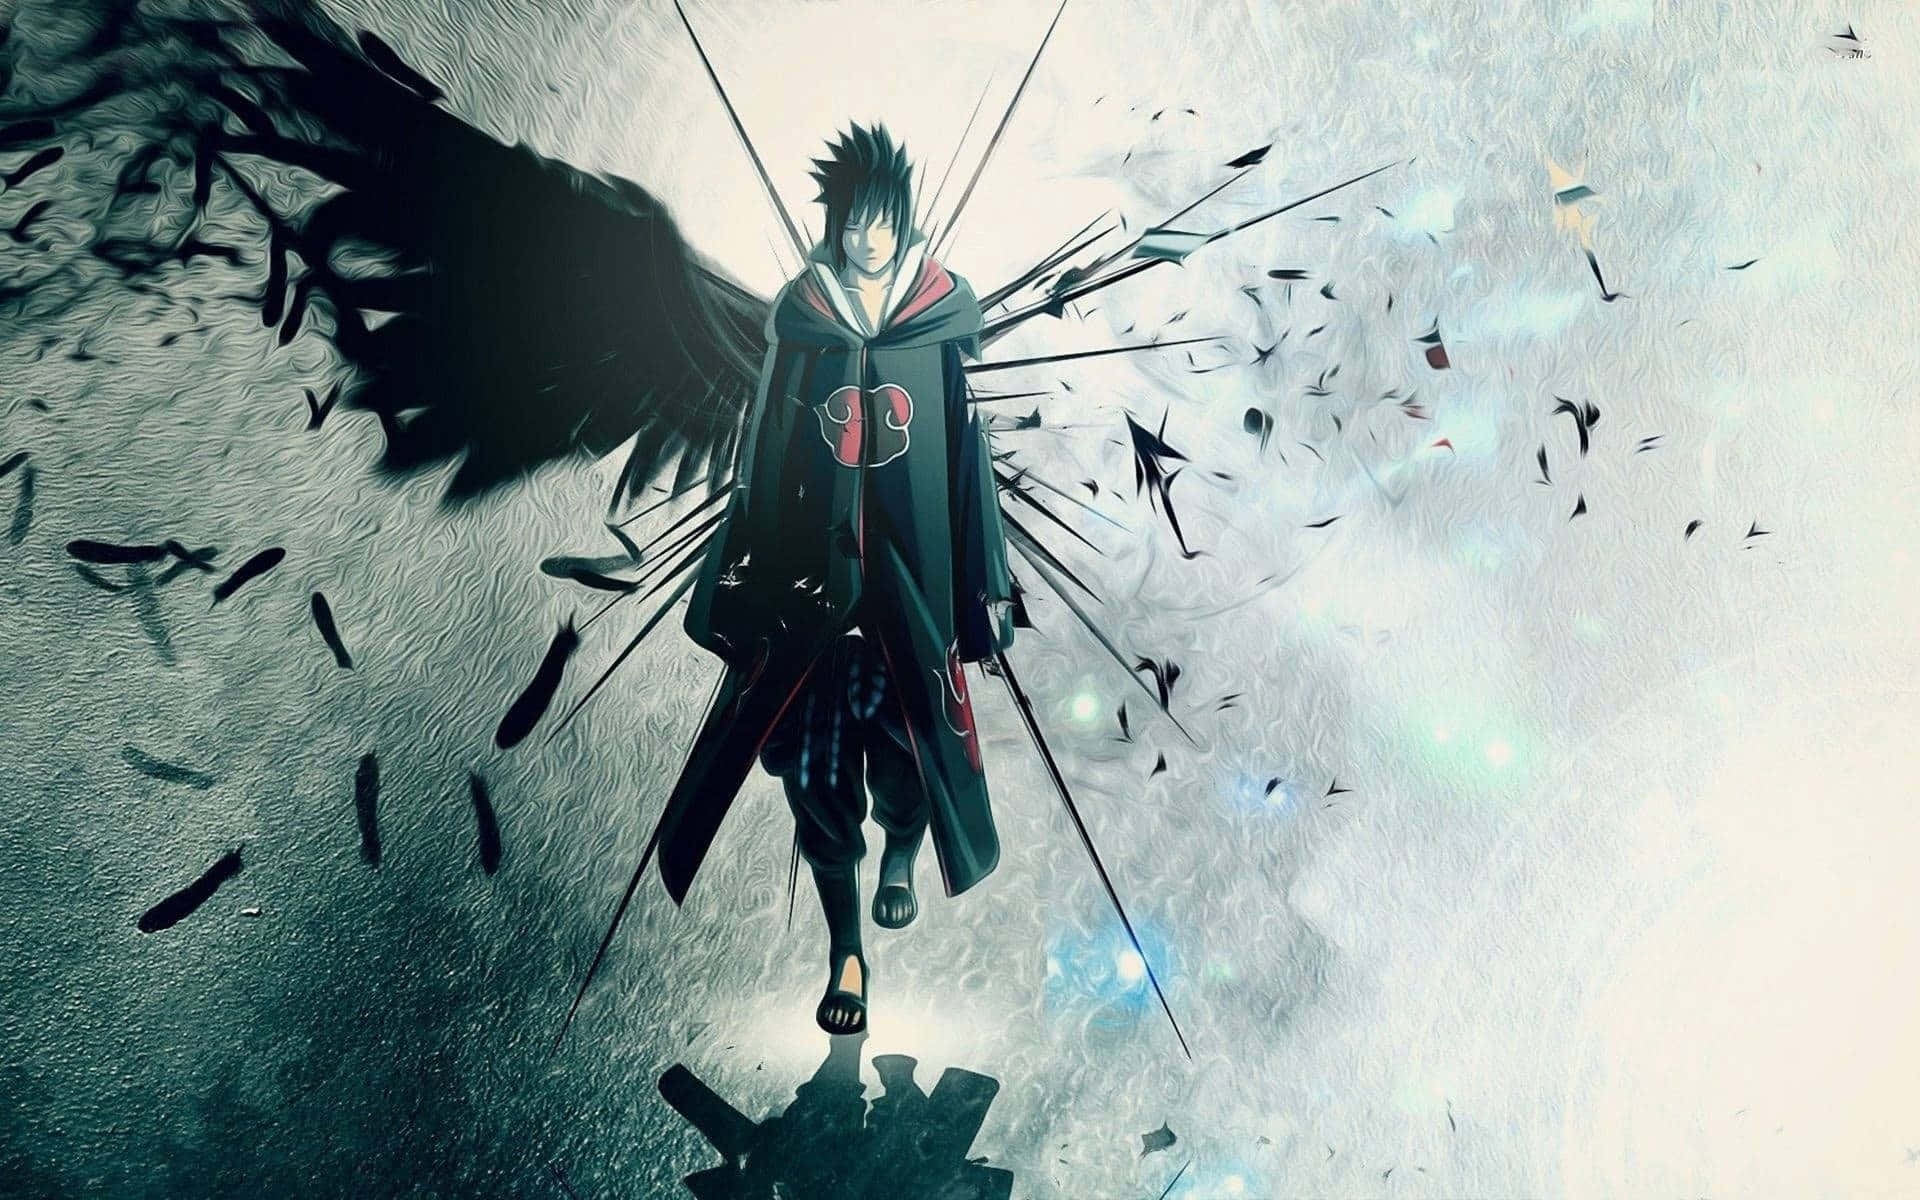 Hintergrundbildvon Sasuke